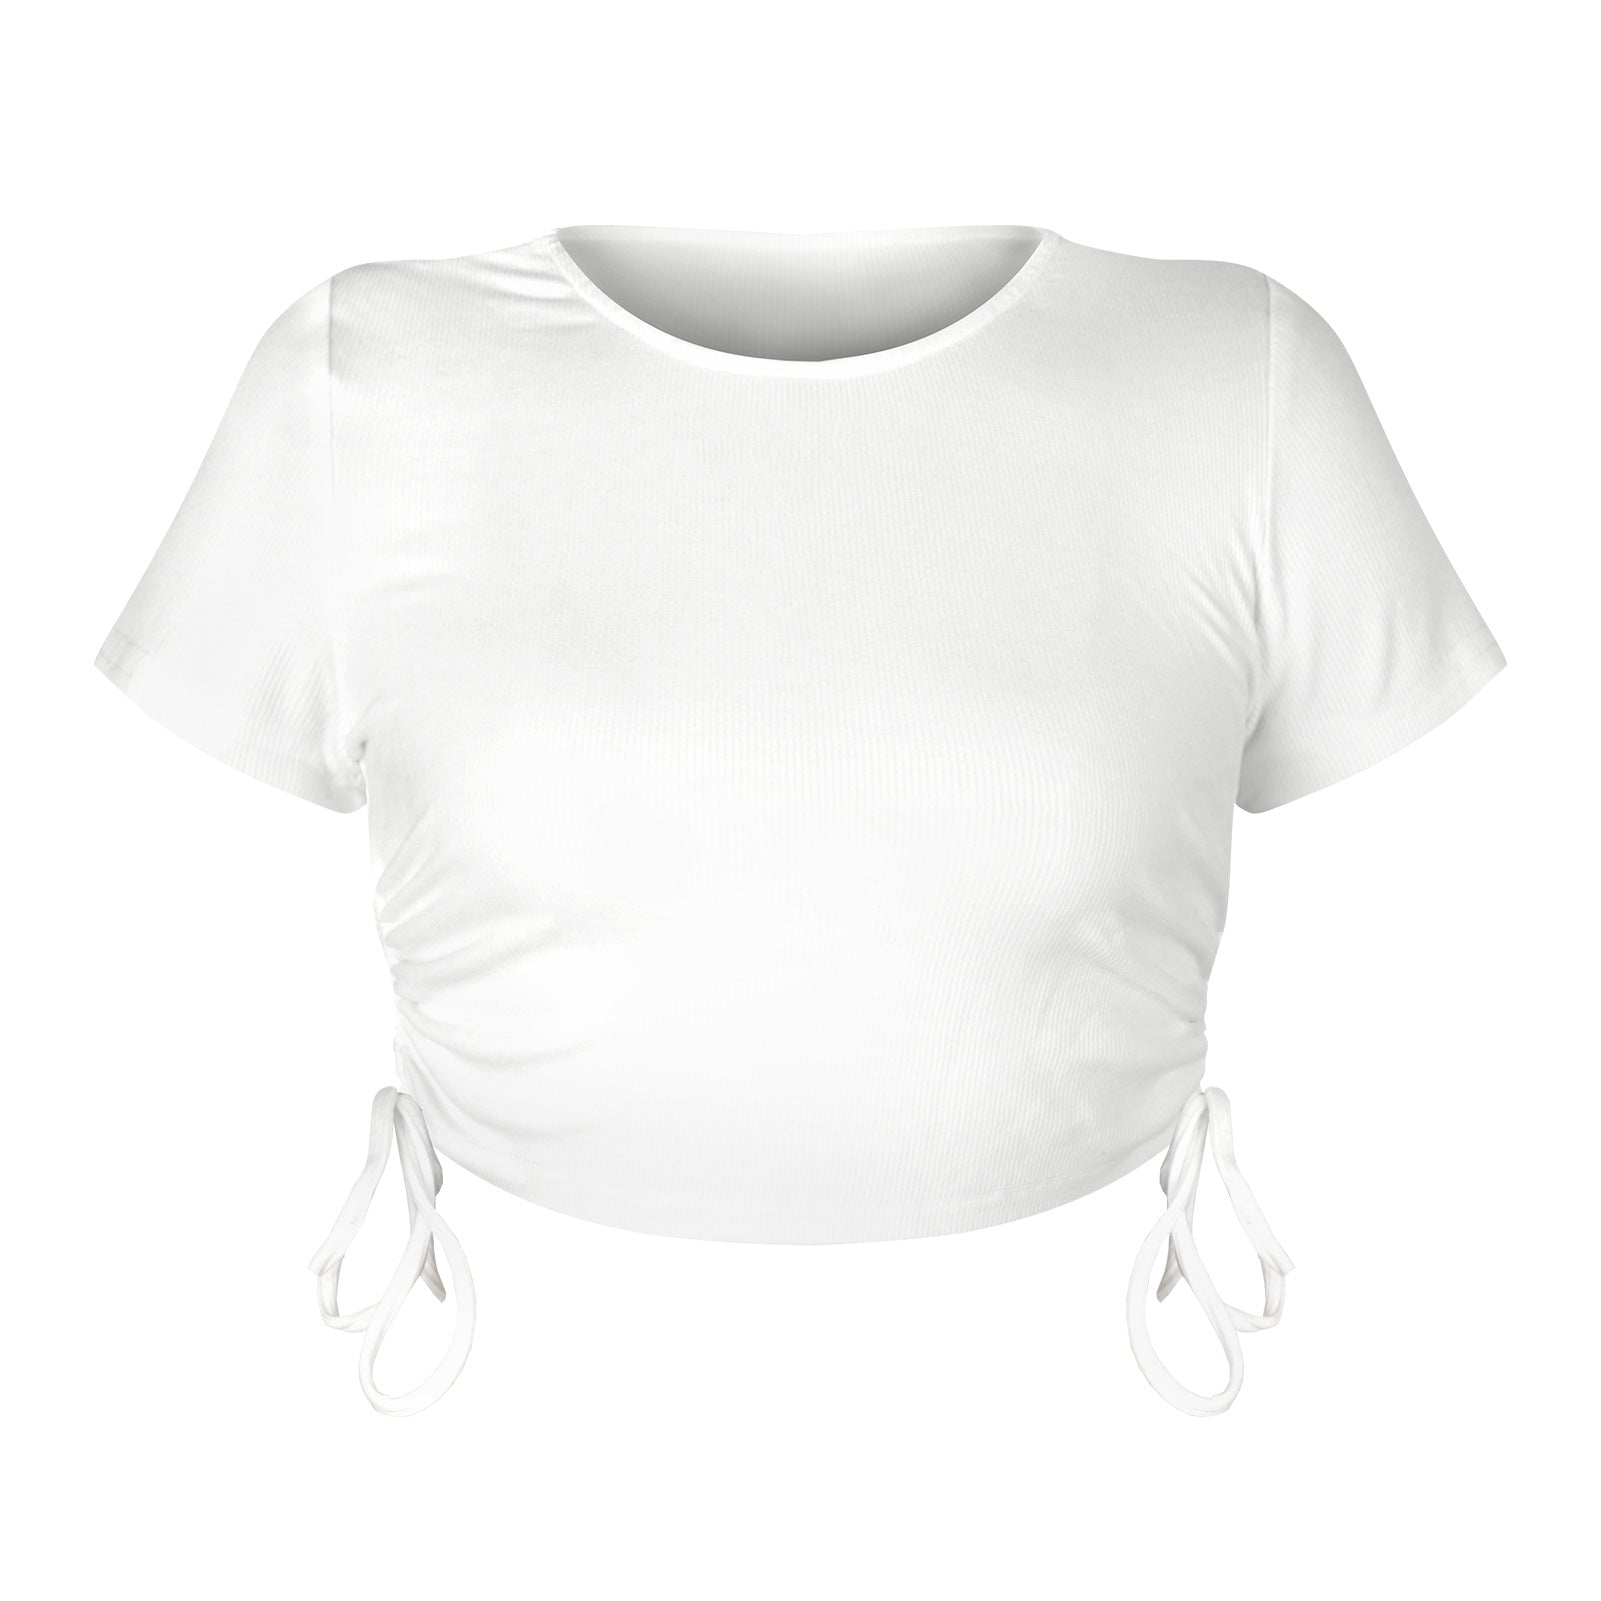 Sexy Round Neck Drawstring Midriff Baring Short Sleeves T Shirts-Shirts & Tops-GSTD001-S-Free Shipping Leatheretro